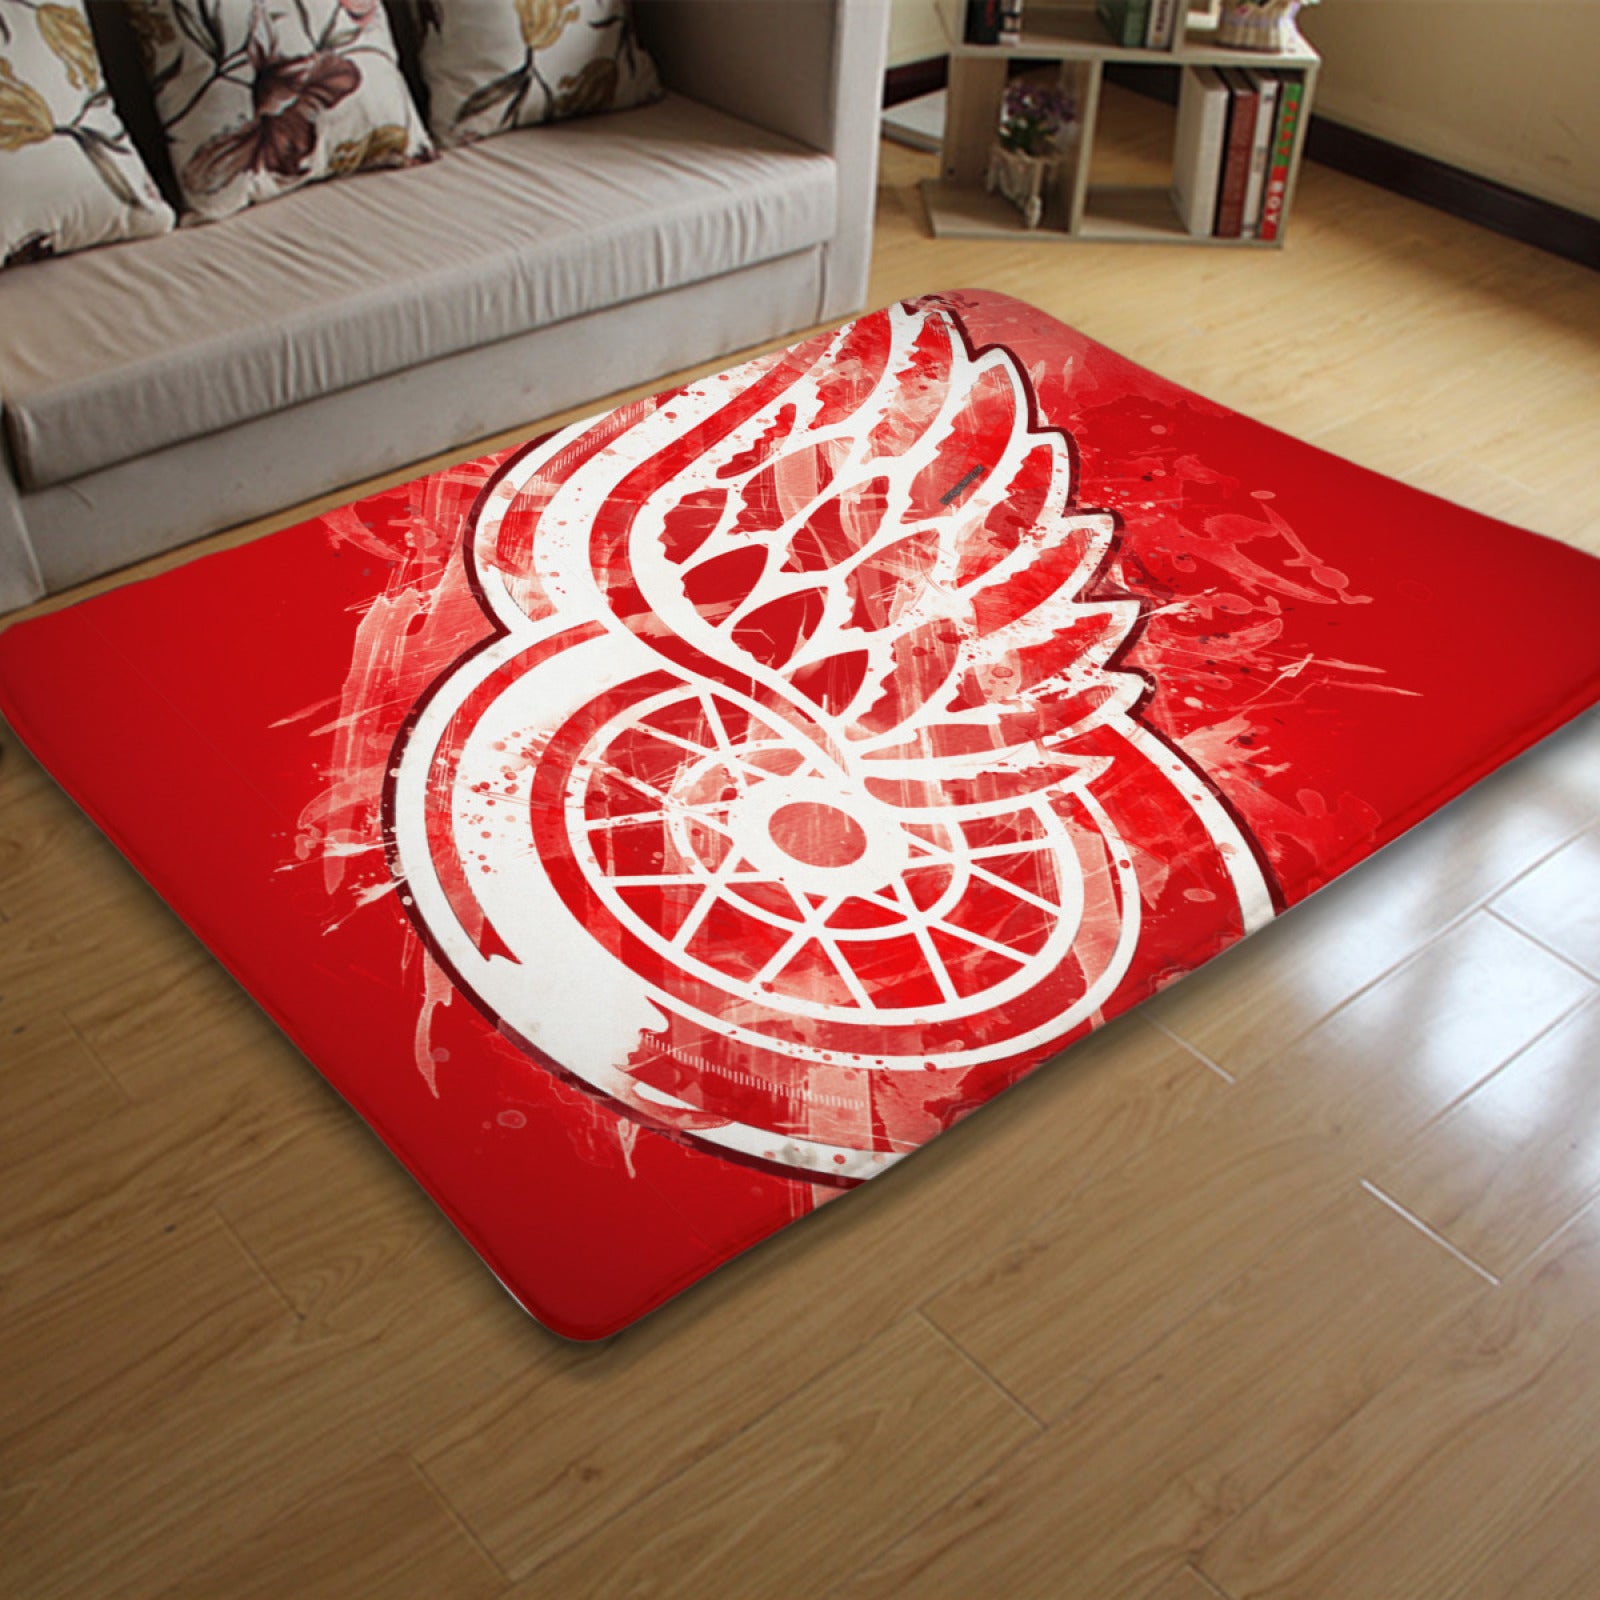 Detroit Red Wings Hockey League Carpet Living Room Bedroom Mats Kitchen Bathroom Rugs